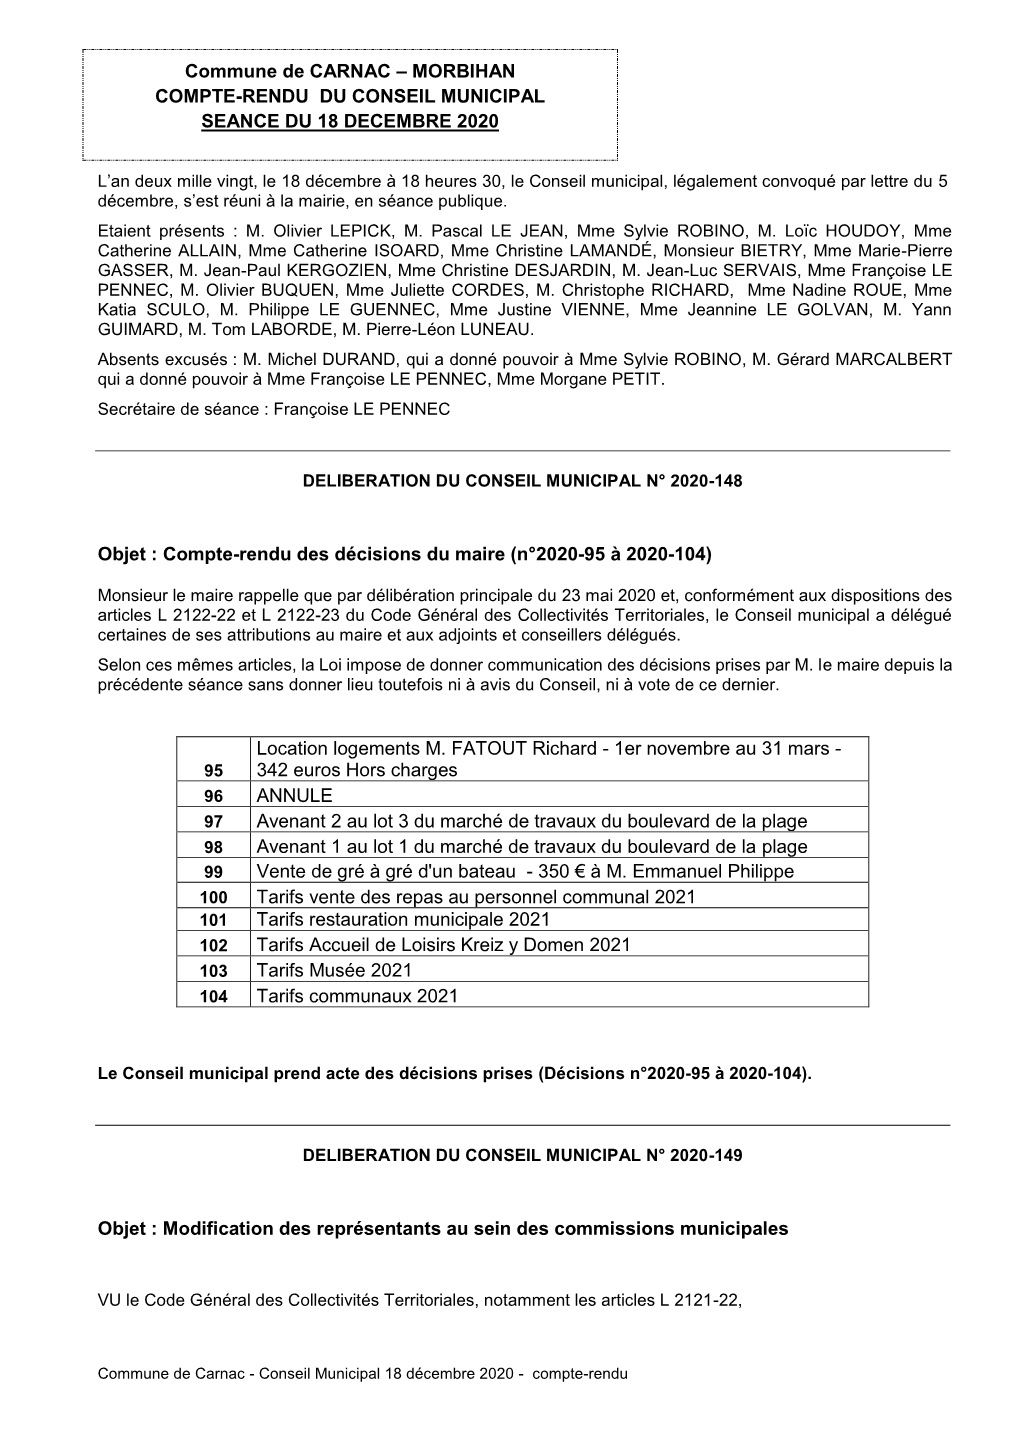 Commune De CARNAC – MORBIHAN COMPTE-RENDU DU CONSEIL MUNICIPAL SEANCE DU 18 DECEMBRE 2020